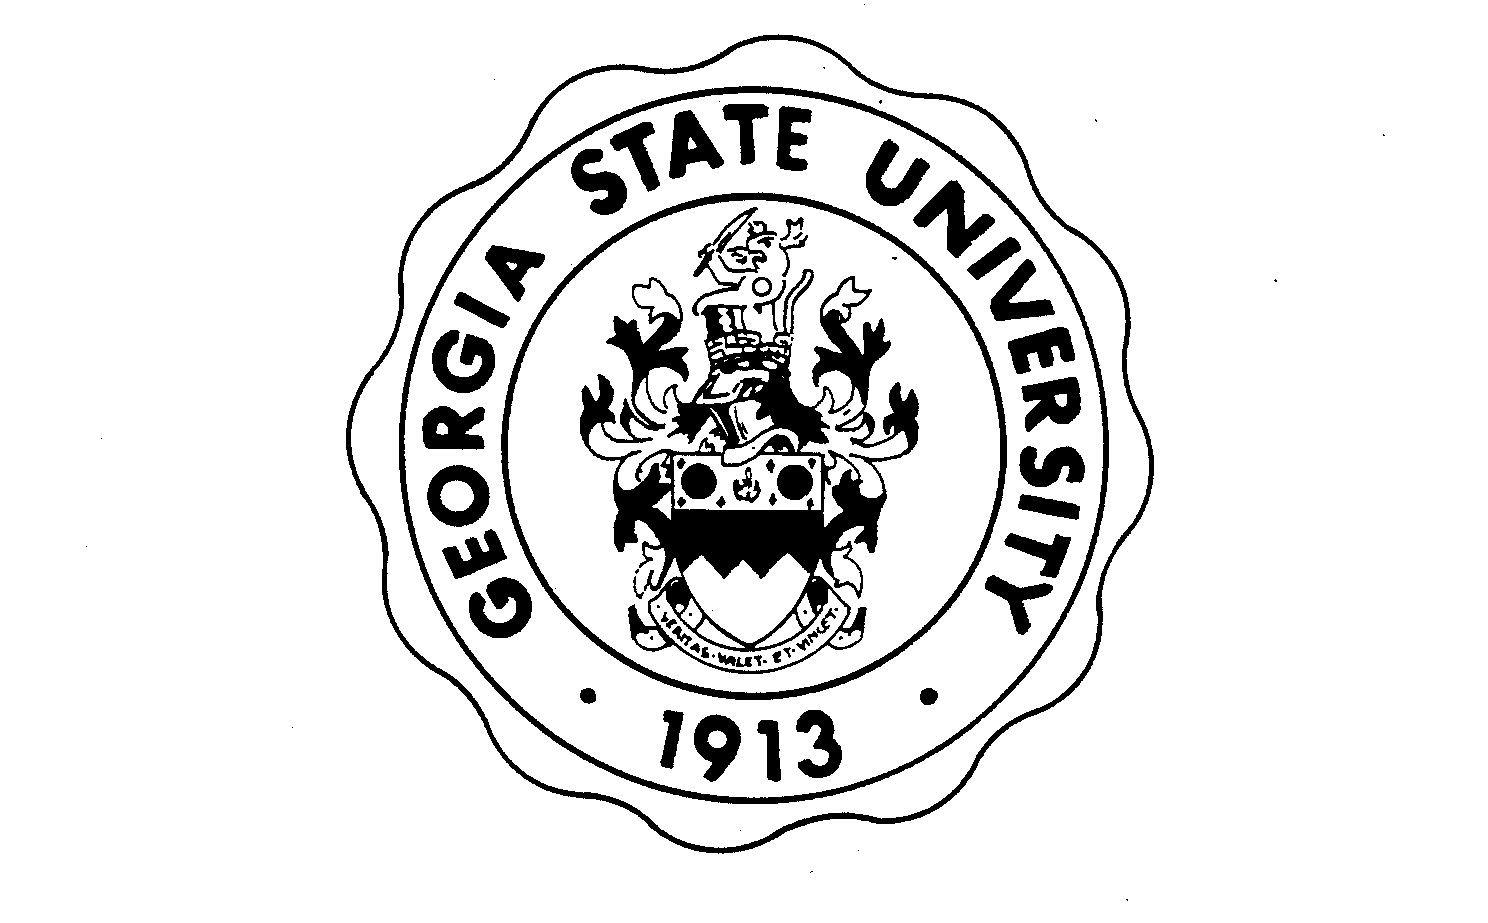  GEORGIA STATE UNIVERSITY 1913